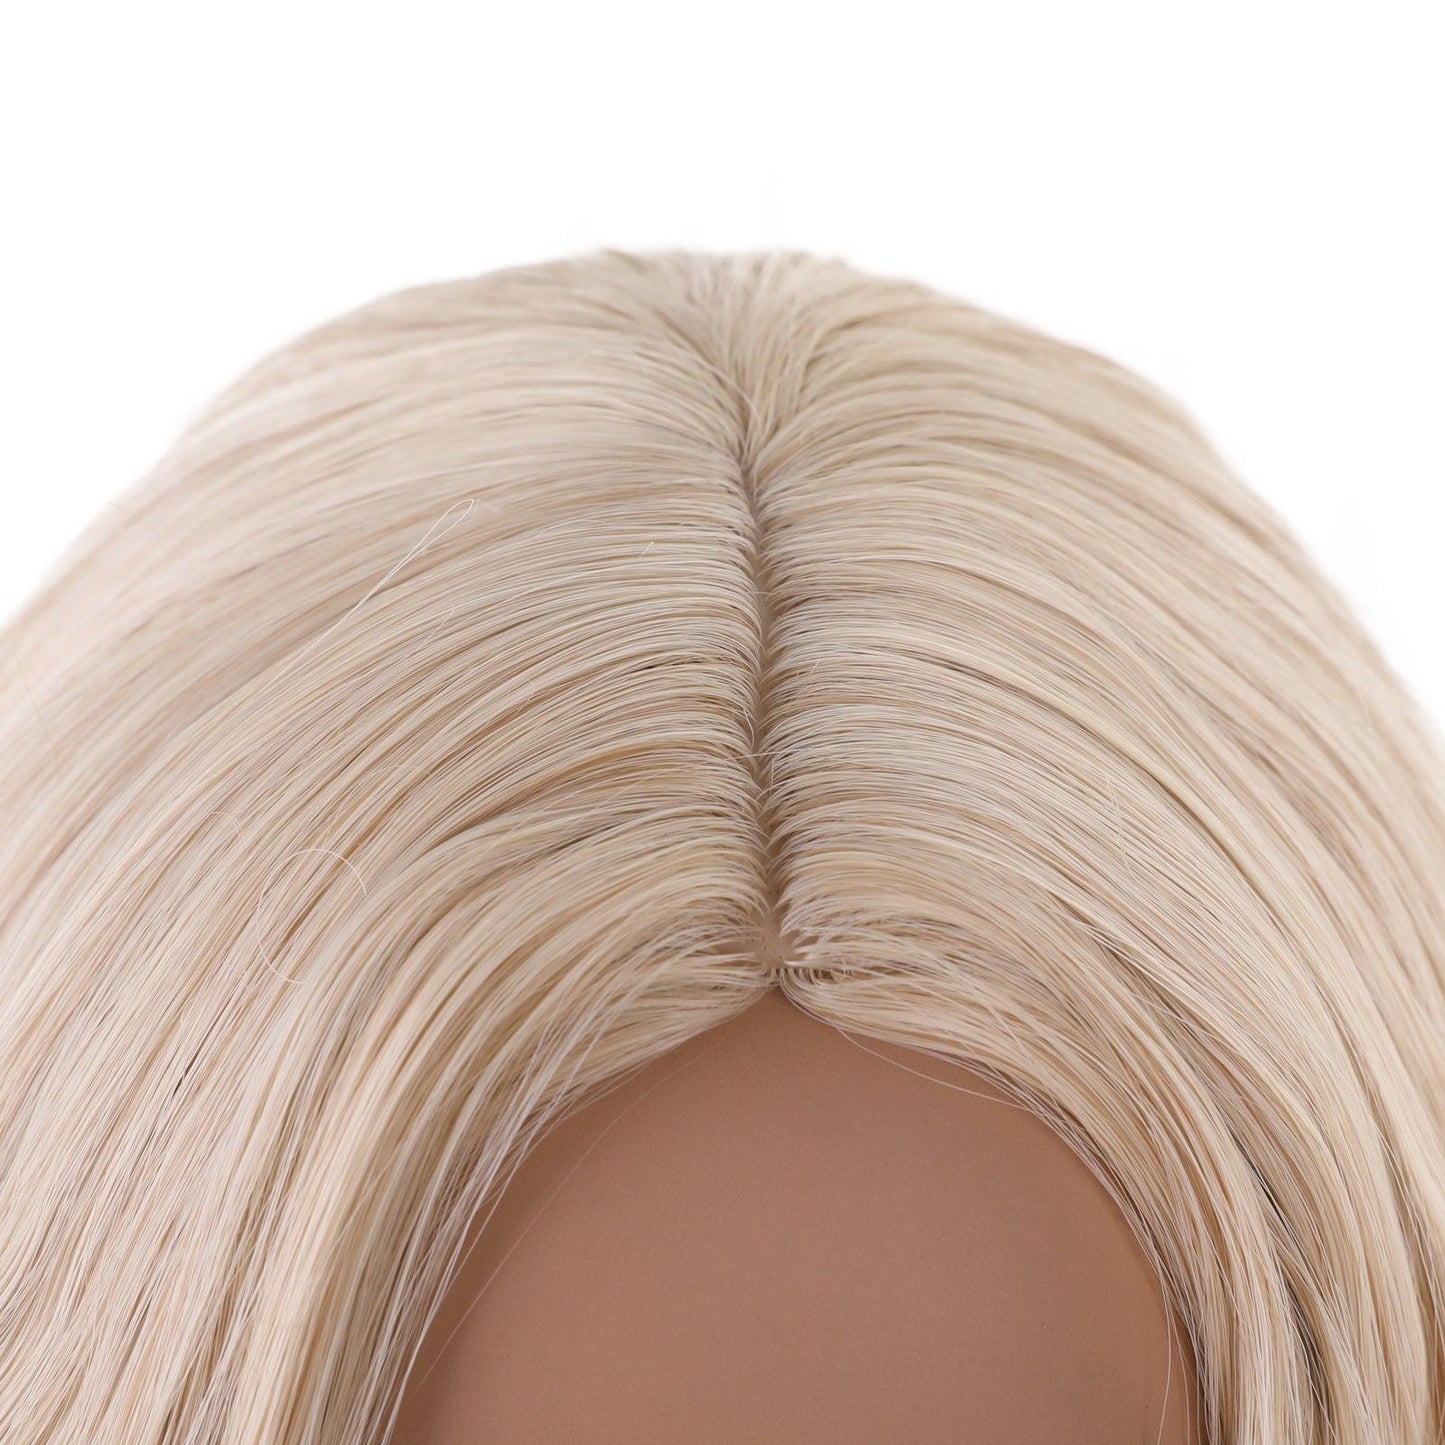 hocus pocus 2 sarah sanderson golden long movie cosplay wig 405t